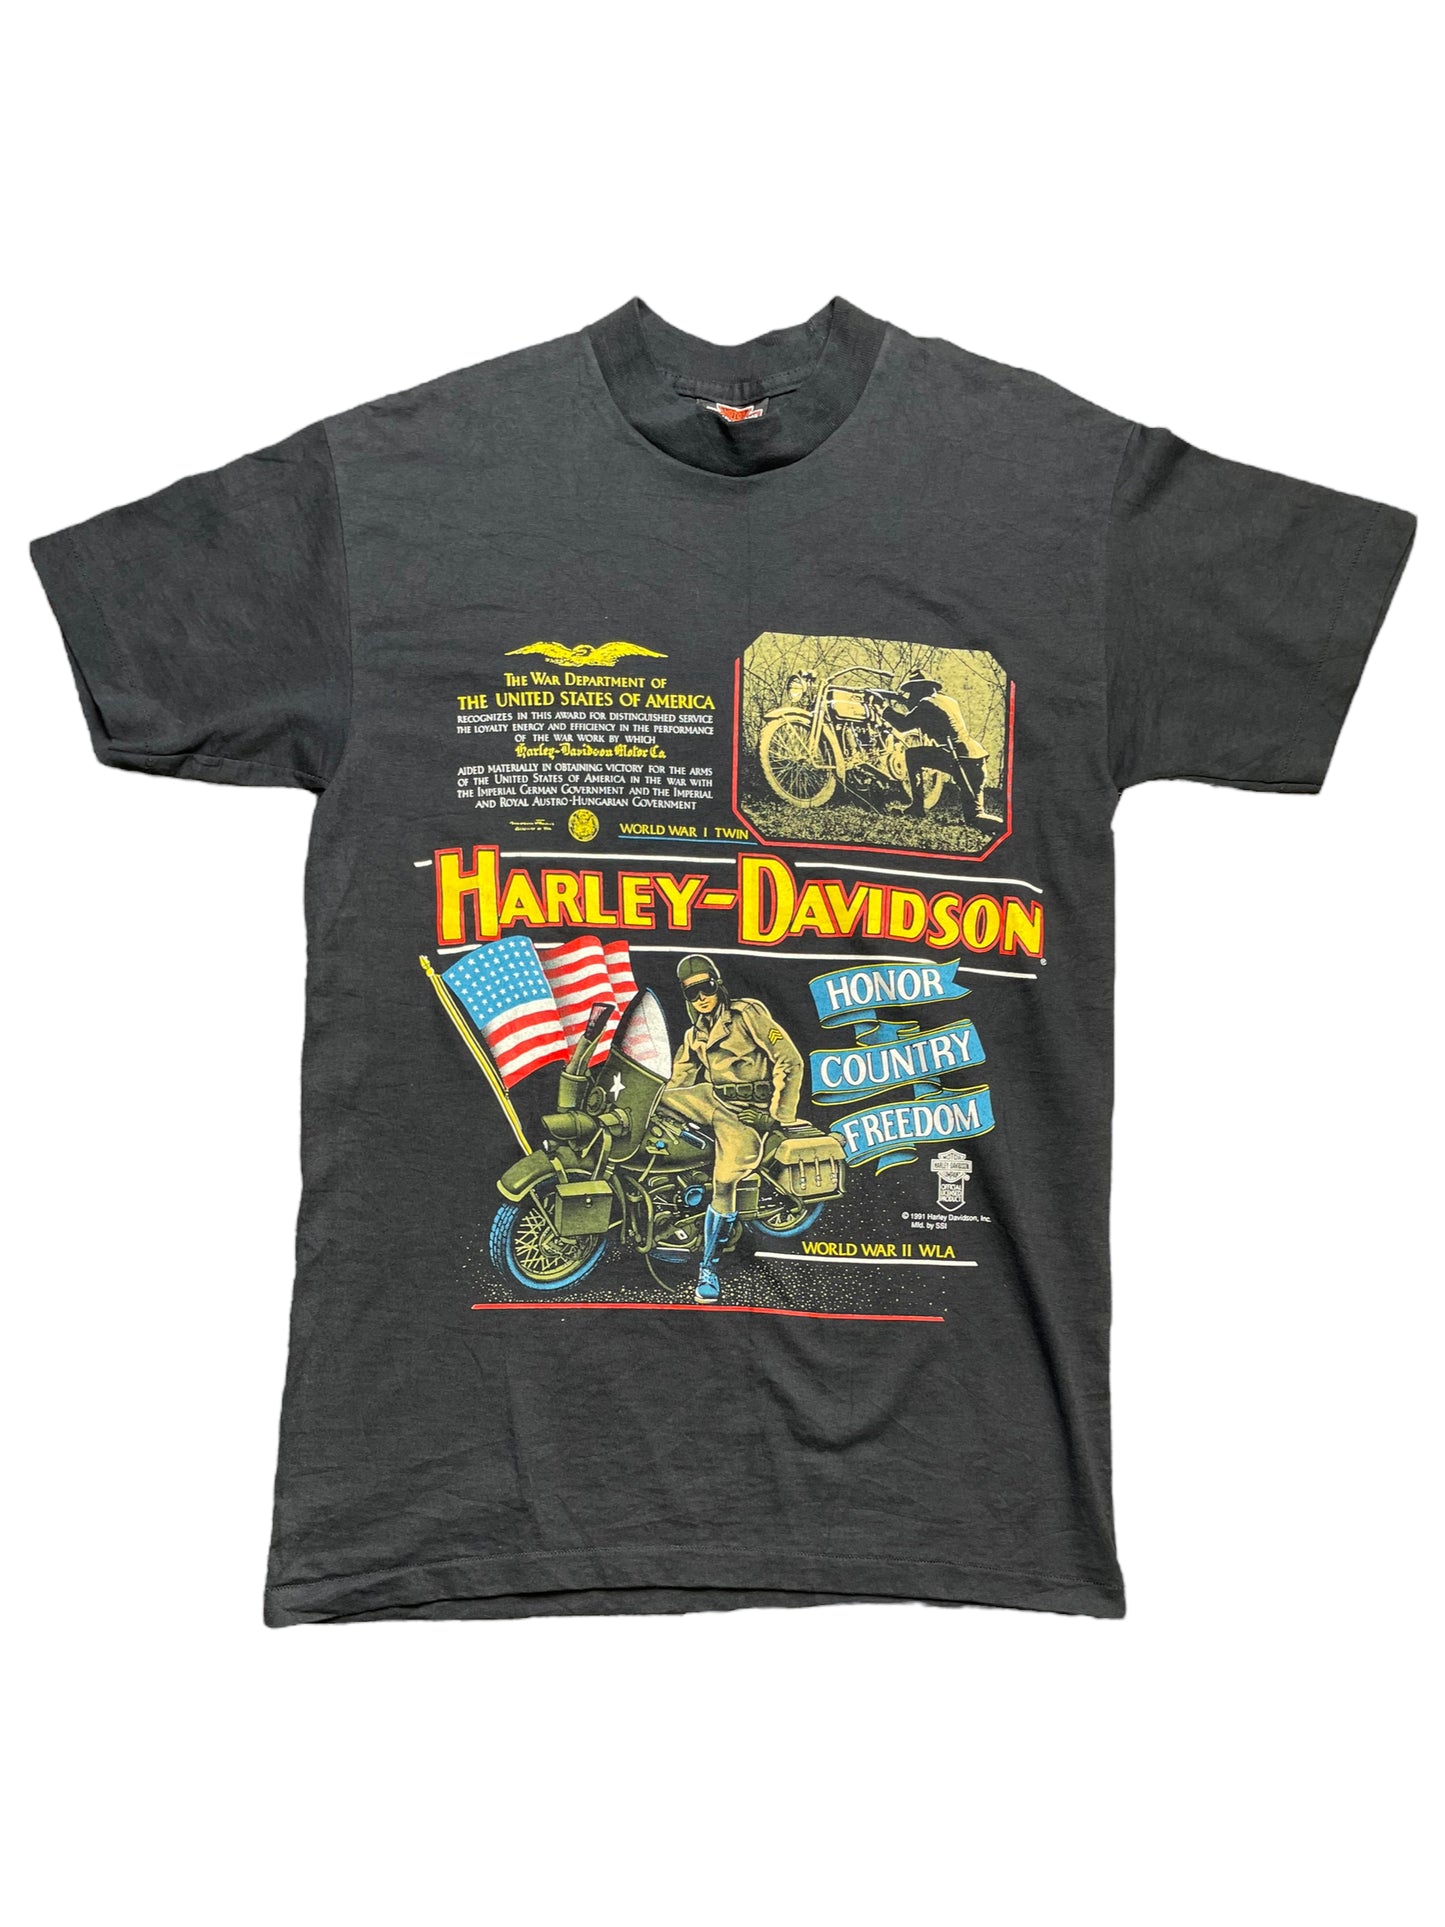 Vintage 1991 Harley Davidson World War II WLA Military Graphic TShirt Medium